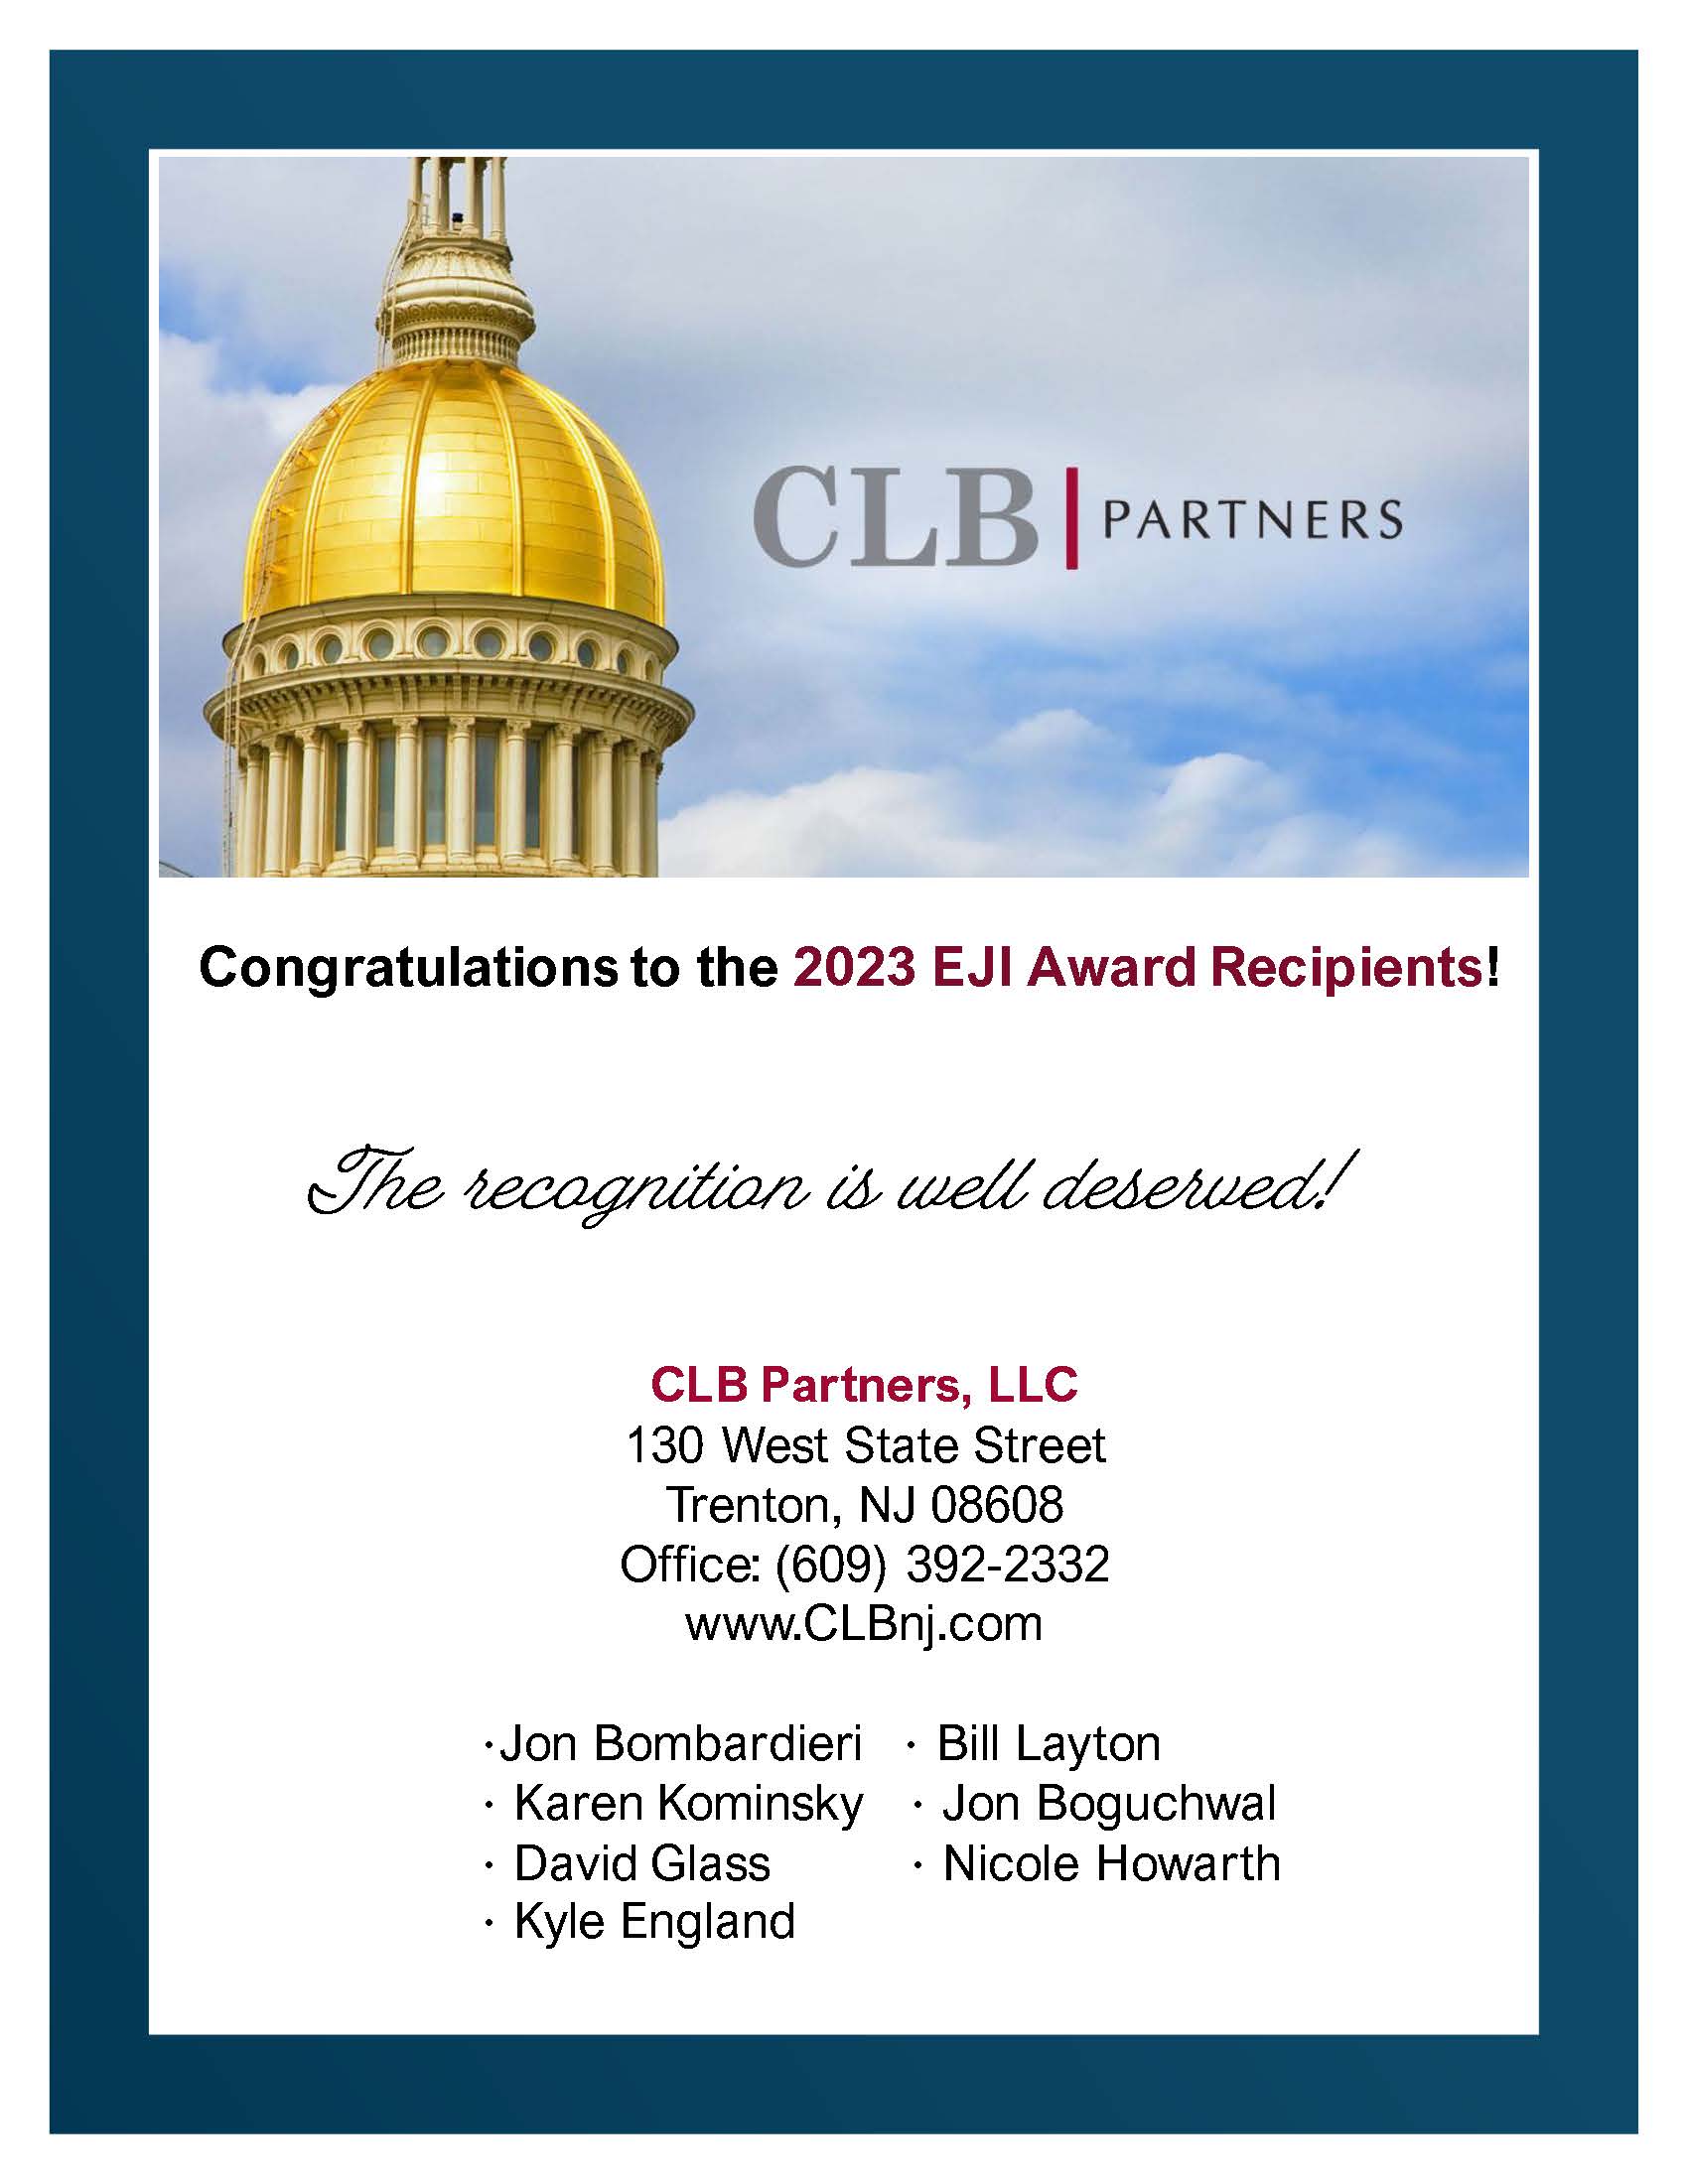 CLB Partners, LLC advertisement